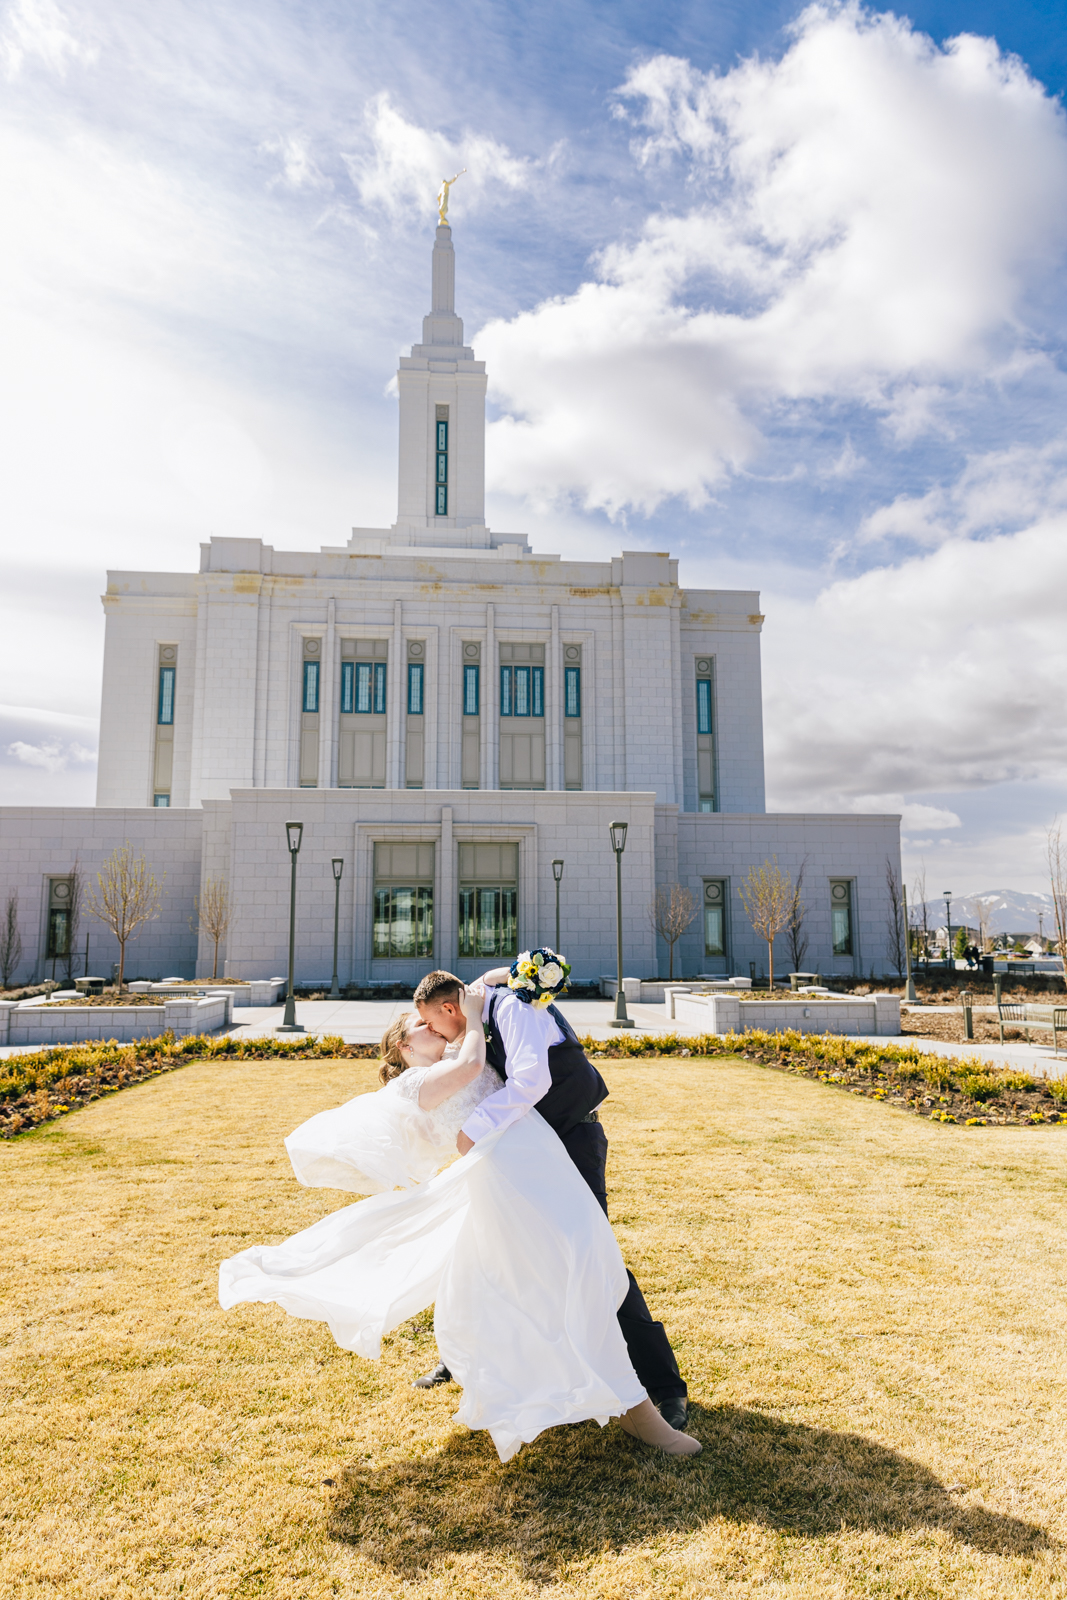 Jackson Hole wedding photographer captures couple embracing at temple 